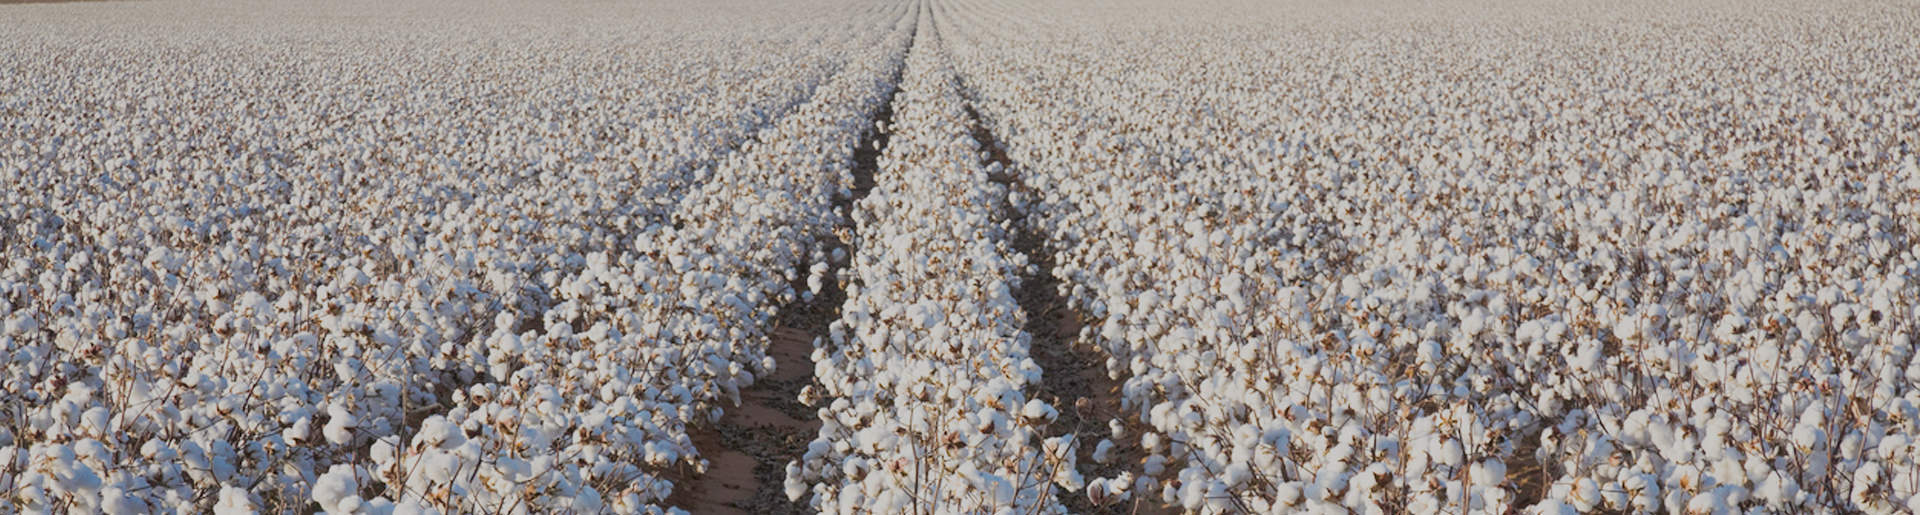 Melawear Compnay cotton field in India big